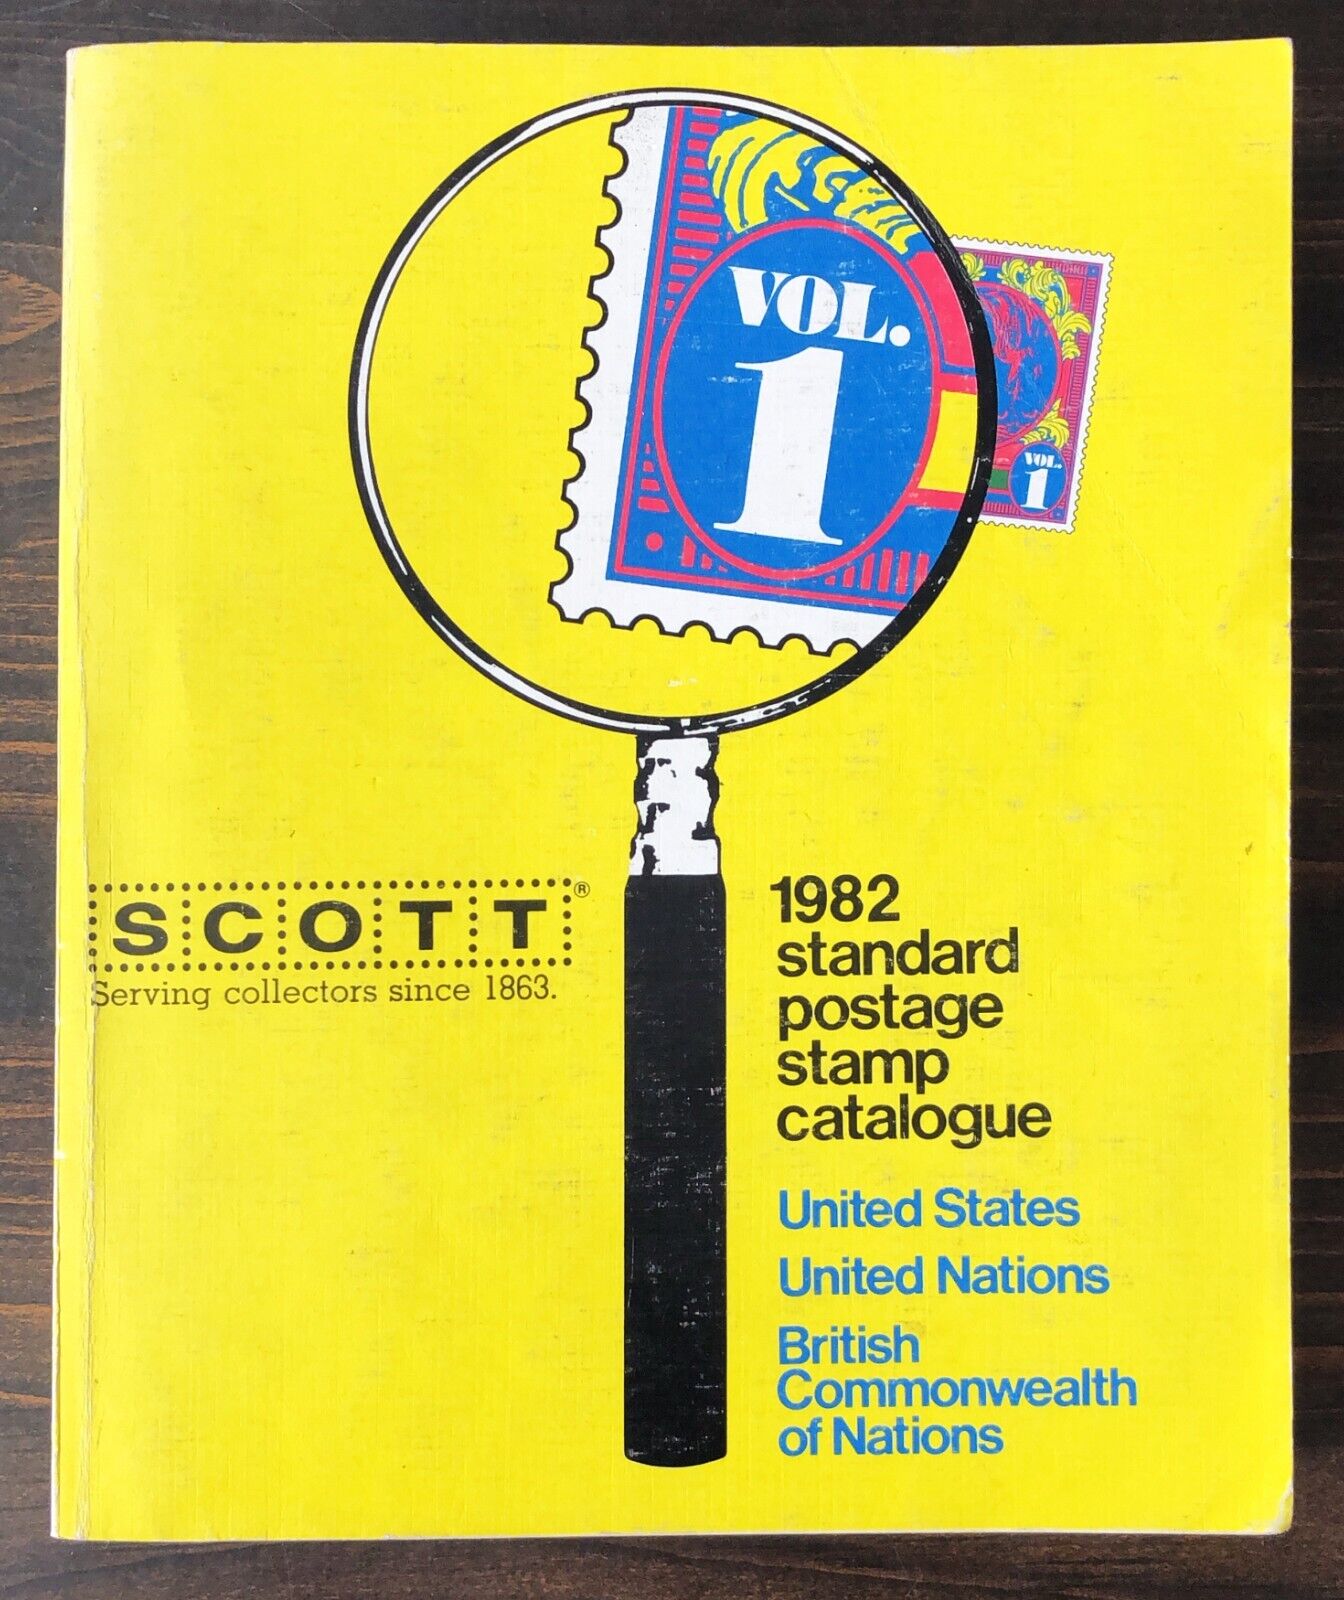 Scott Standard Postage Stamp Catalogue 1982 Vol 1